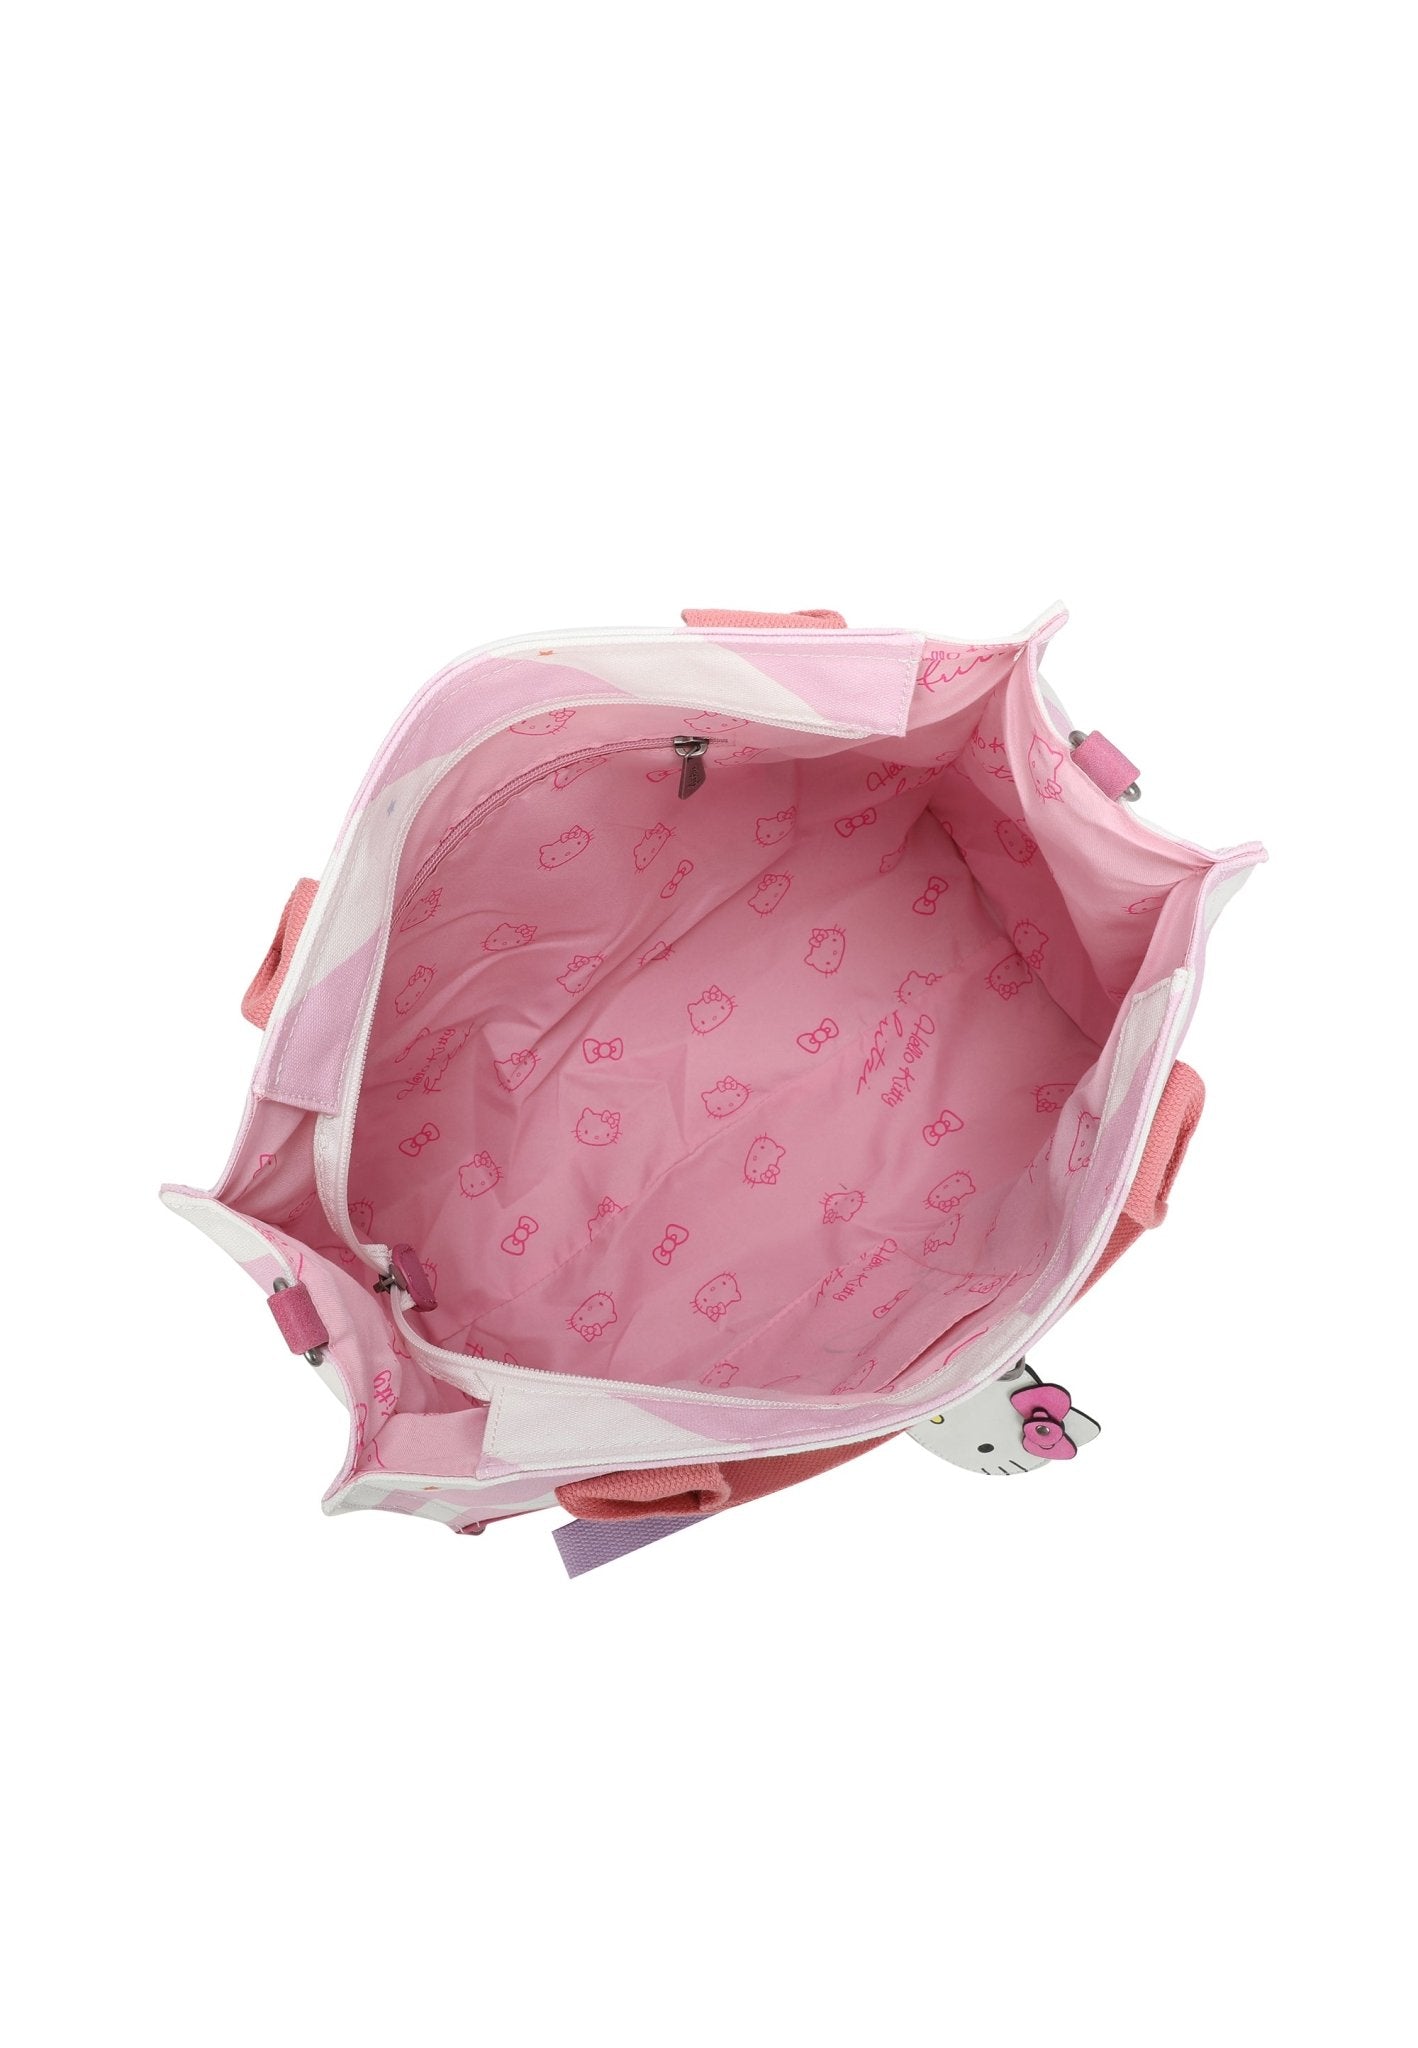 Hello Kitty fritzi Tote Bag Stripe - Fritzi aus Preußen - Stripe Ice Rose